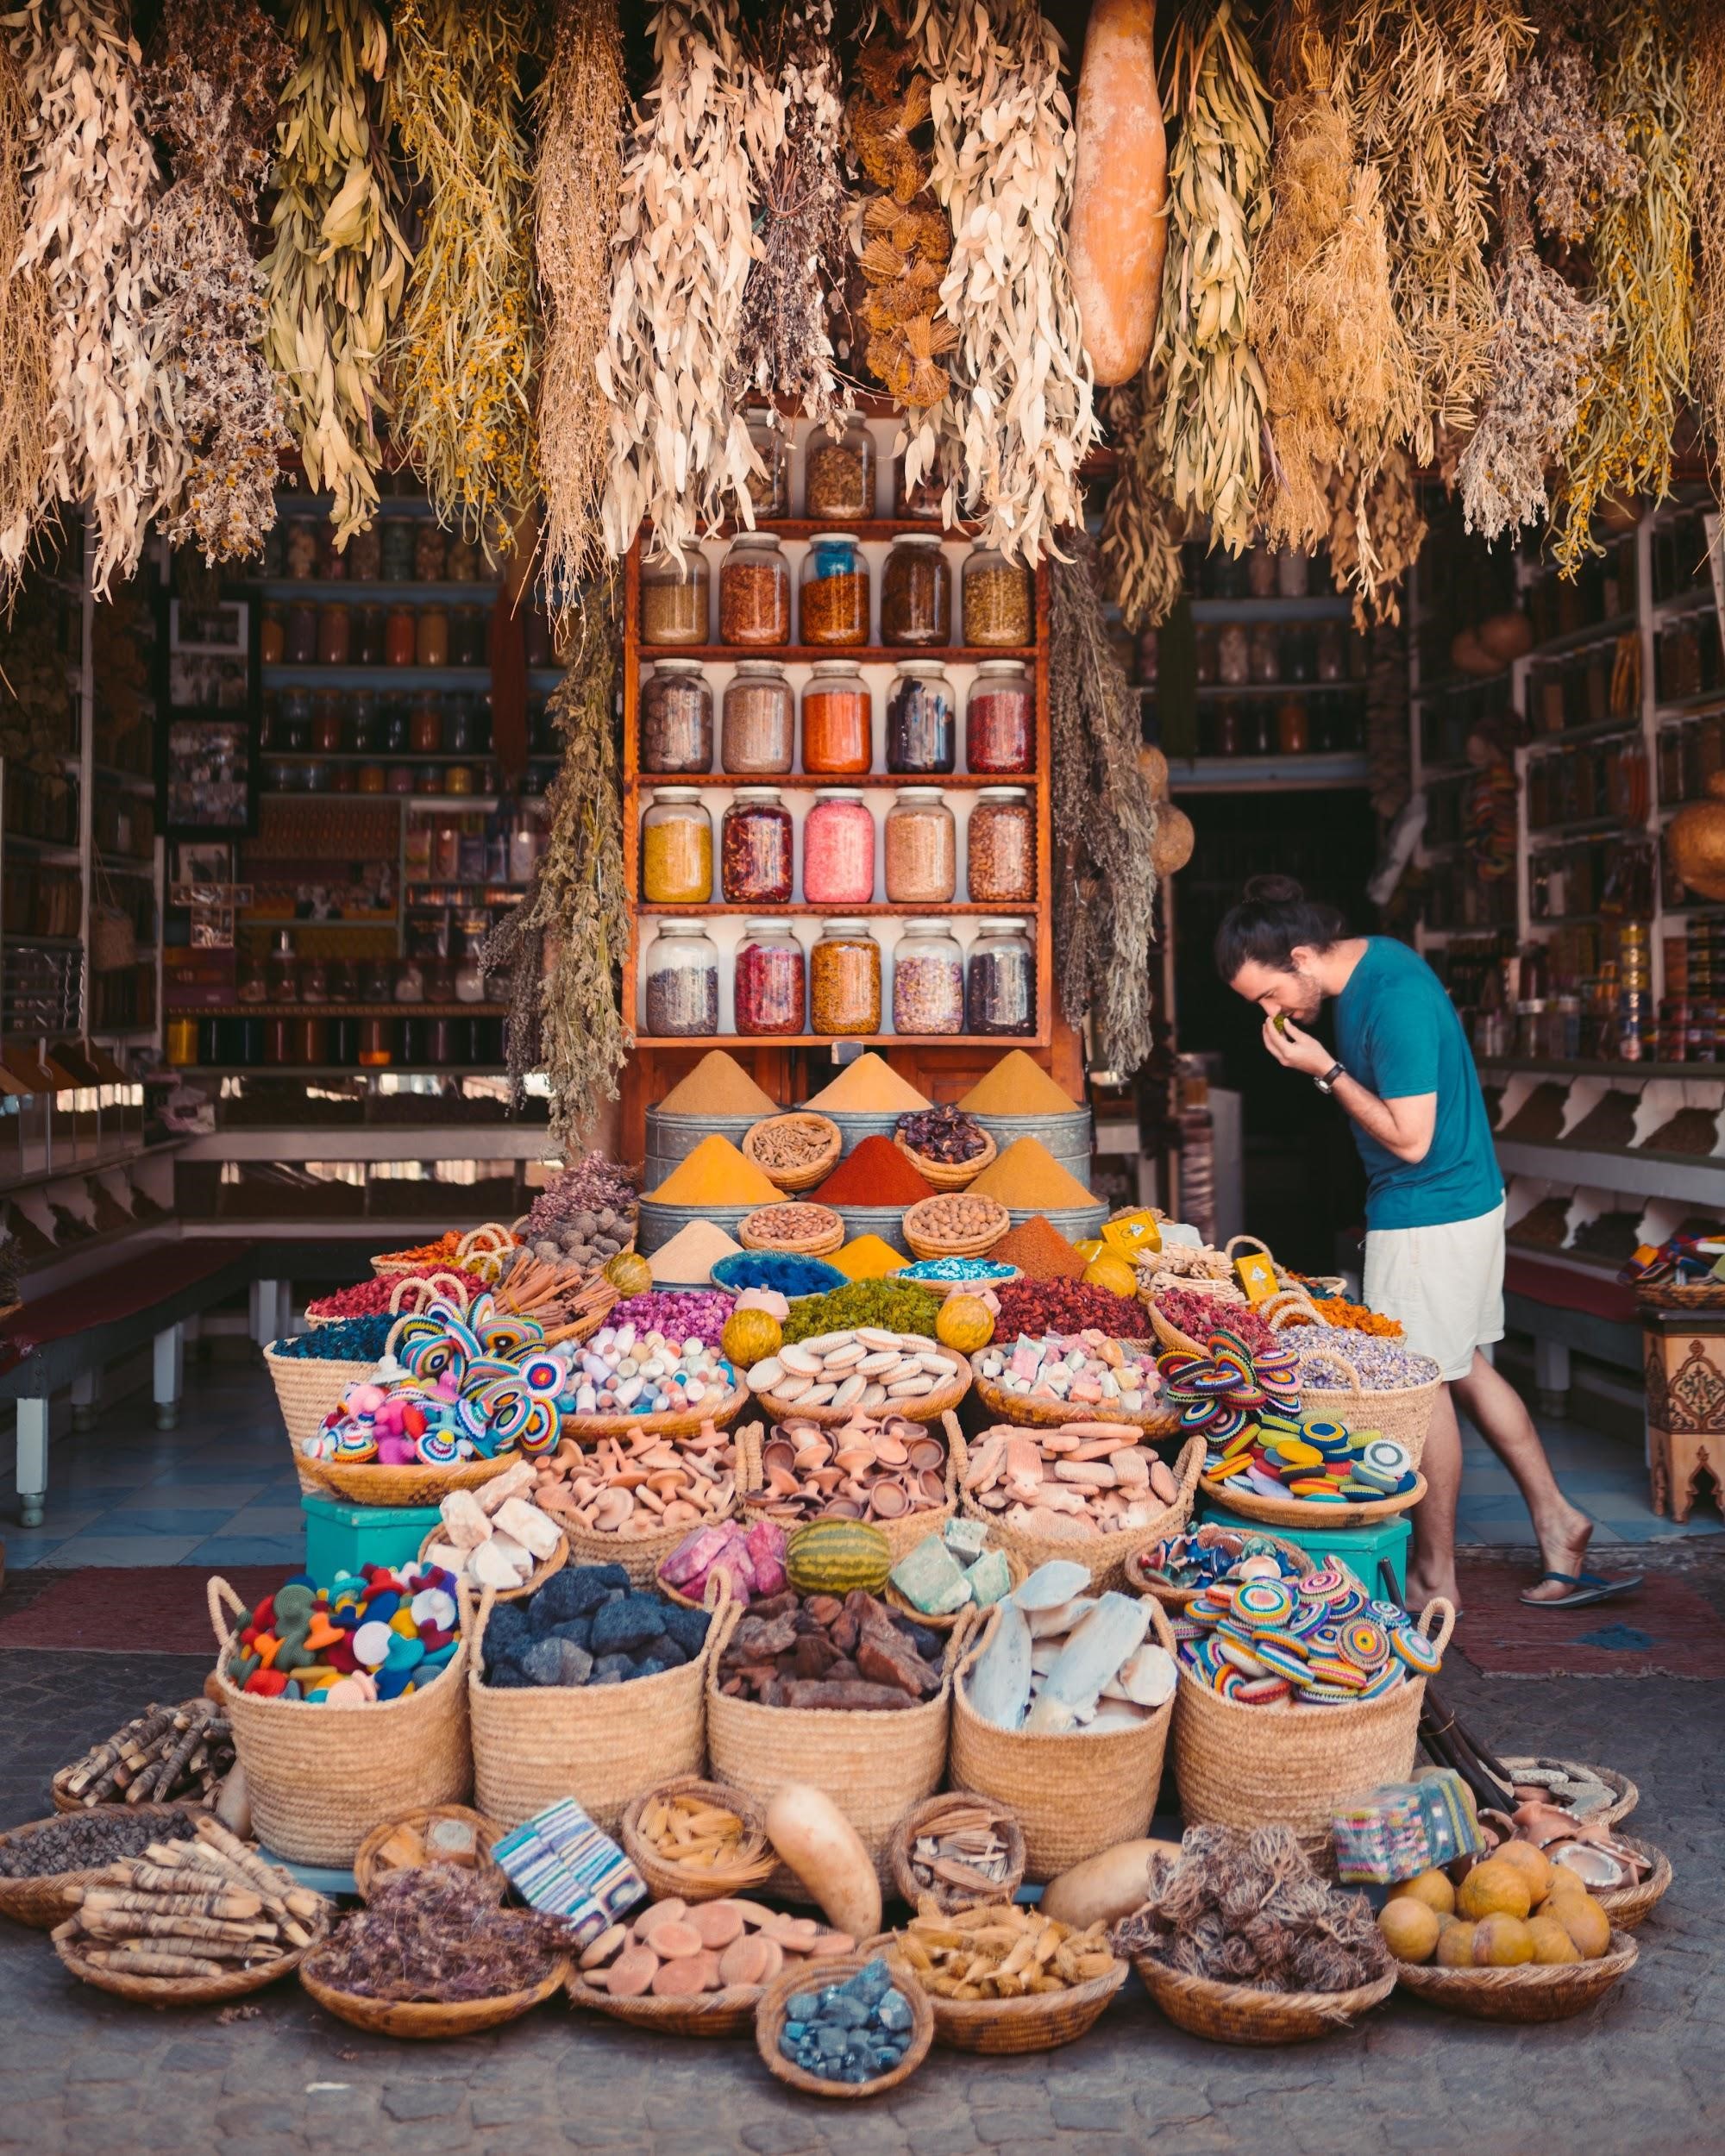 Image of market in Marrakesh, Morocco